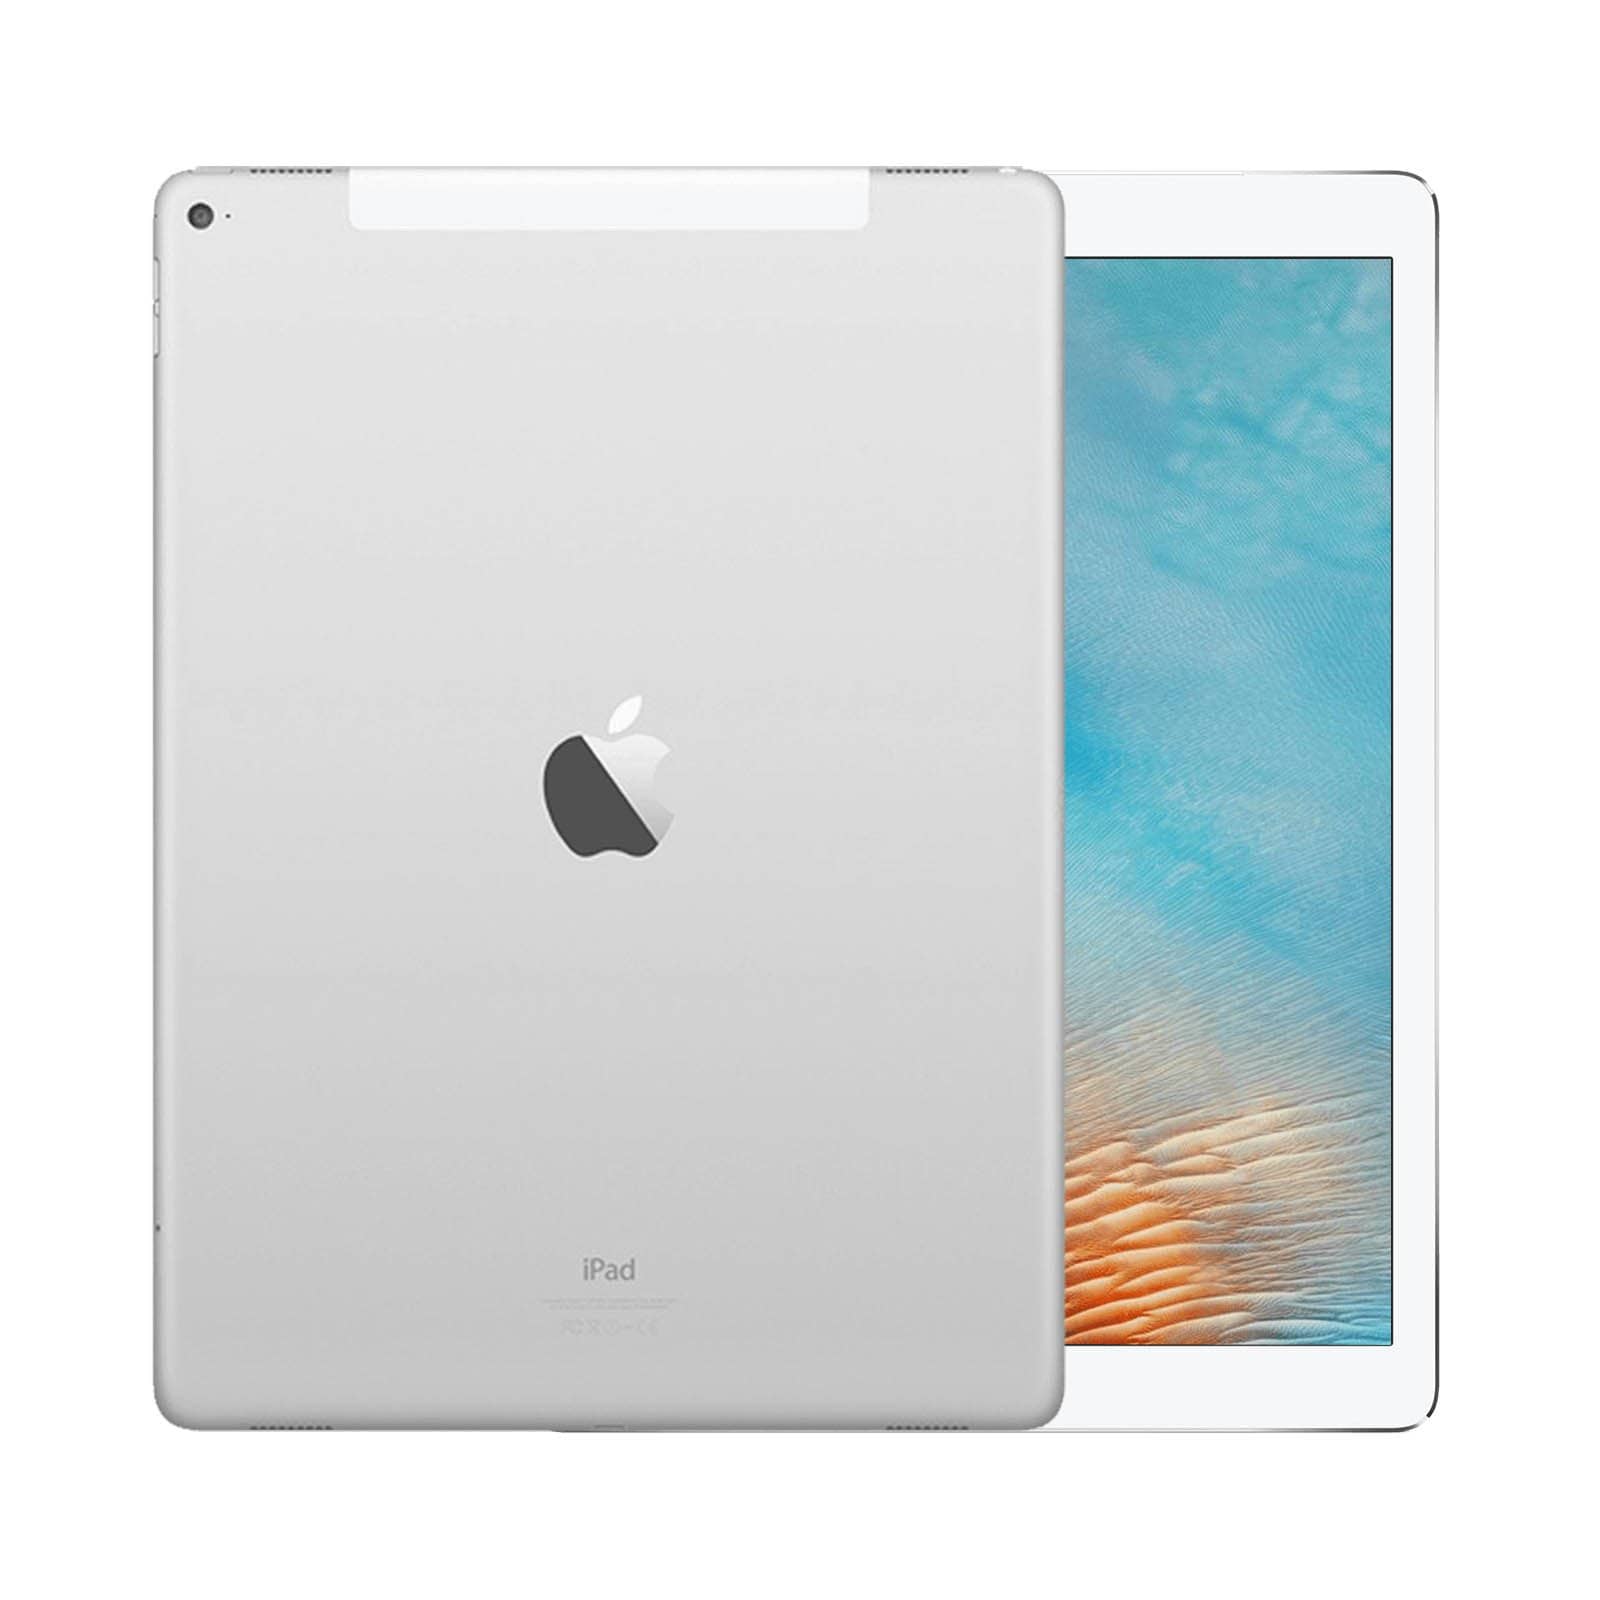 iPad Pro 12.9 Inch 2nd Gen 256GB Silver Very Good - Unlocked 256GB Silver Very Good